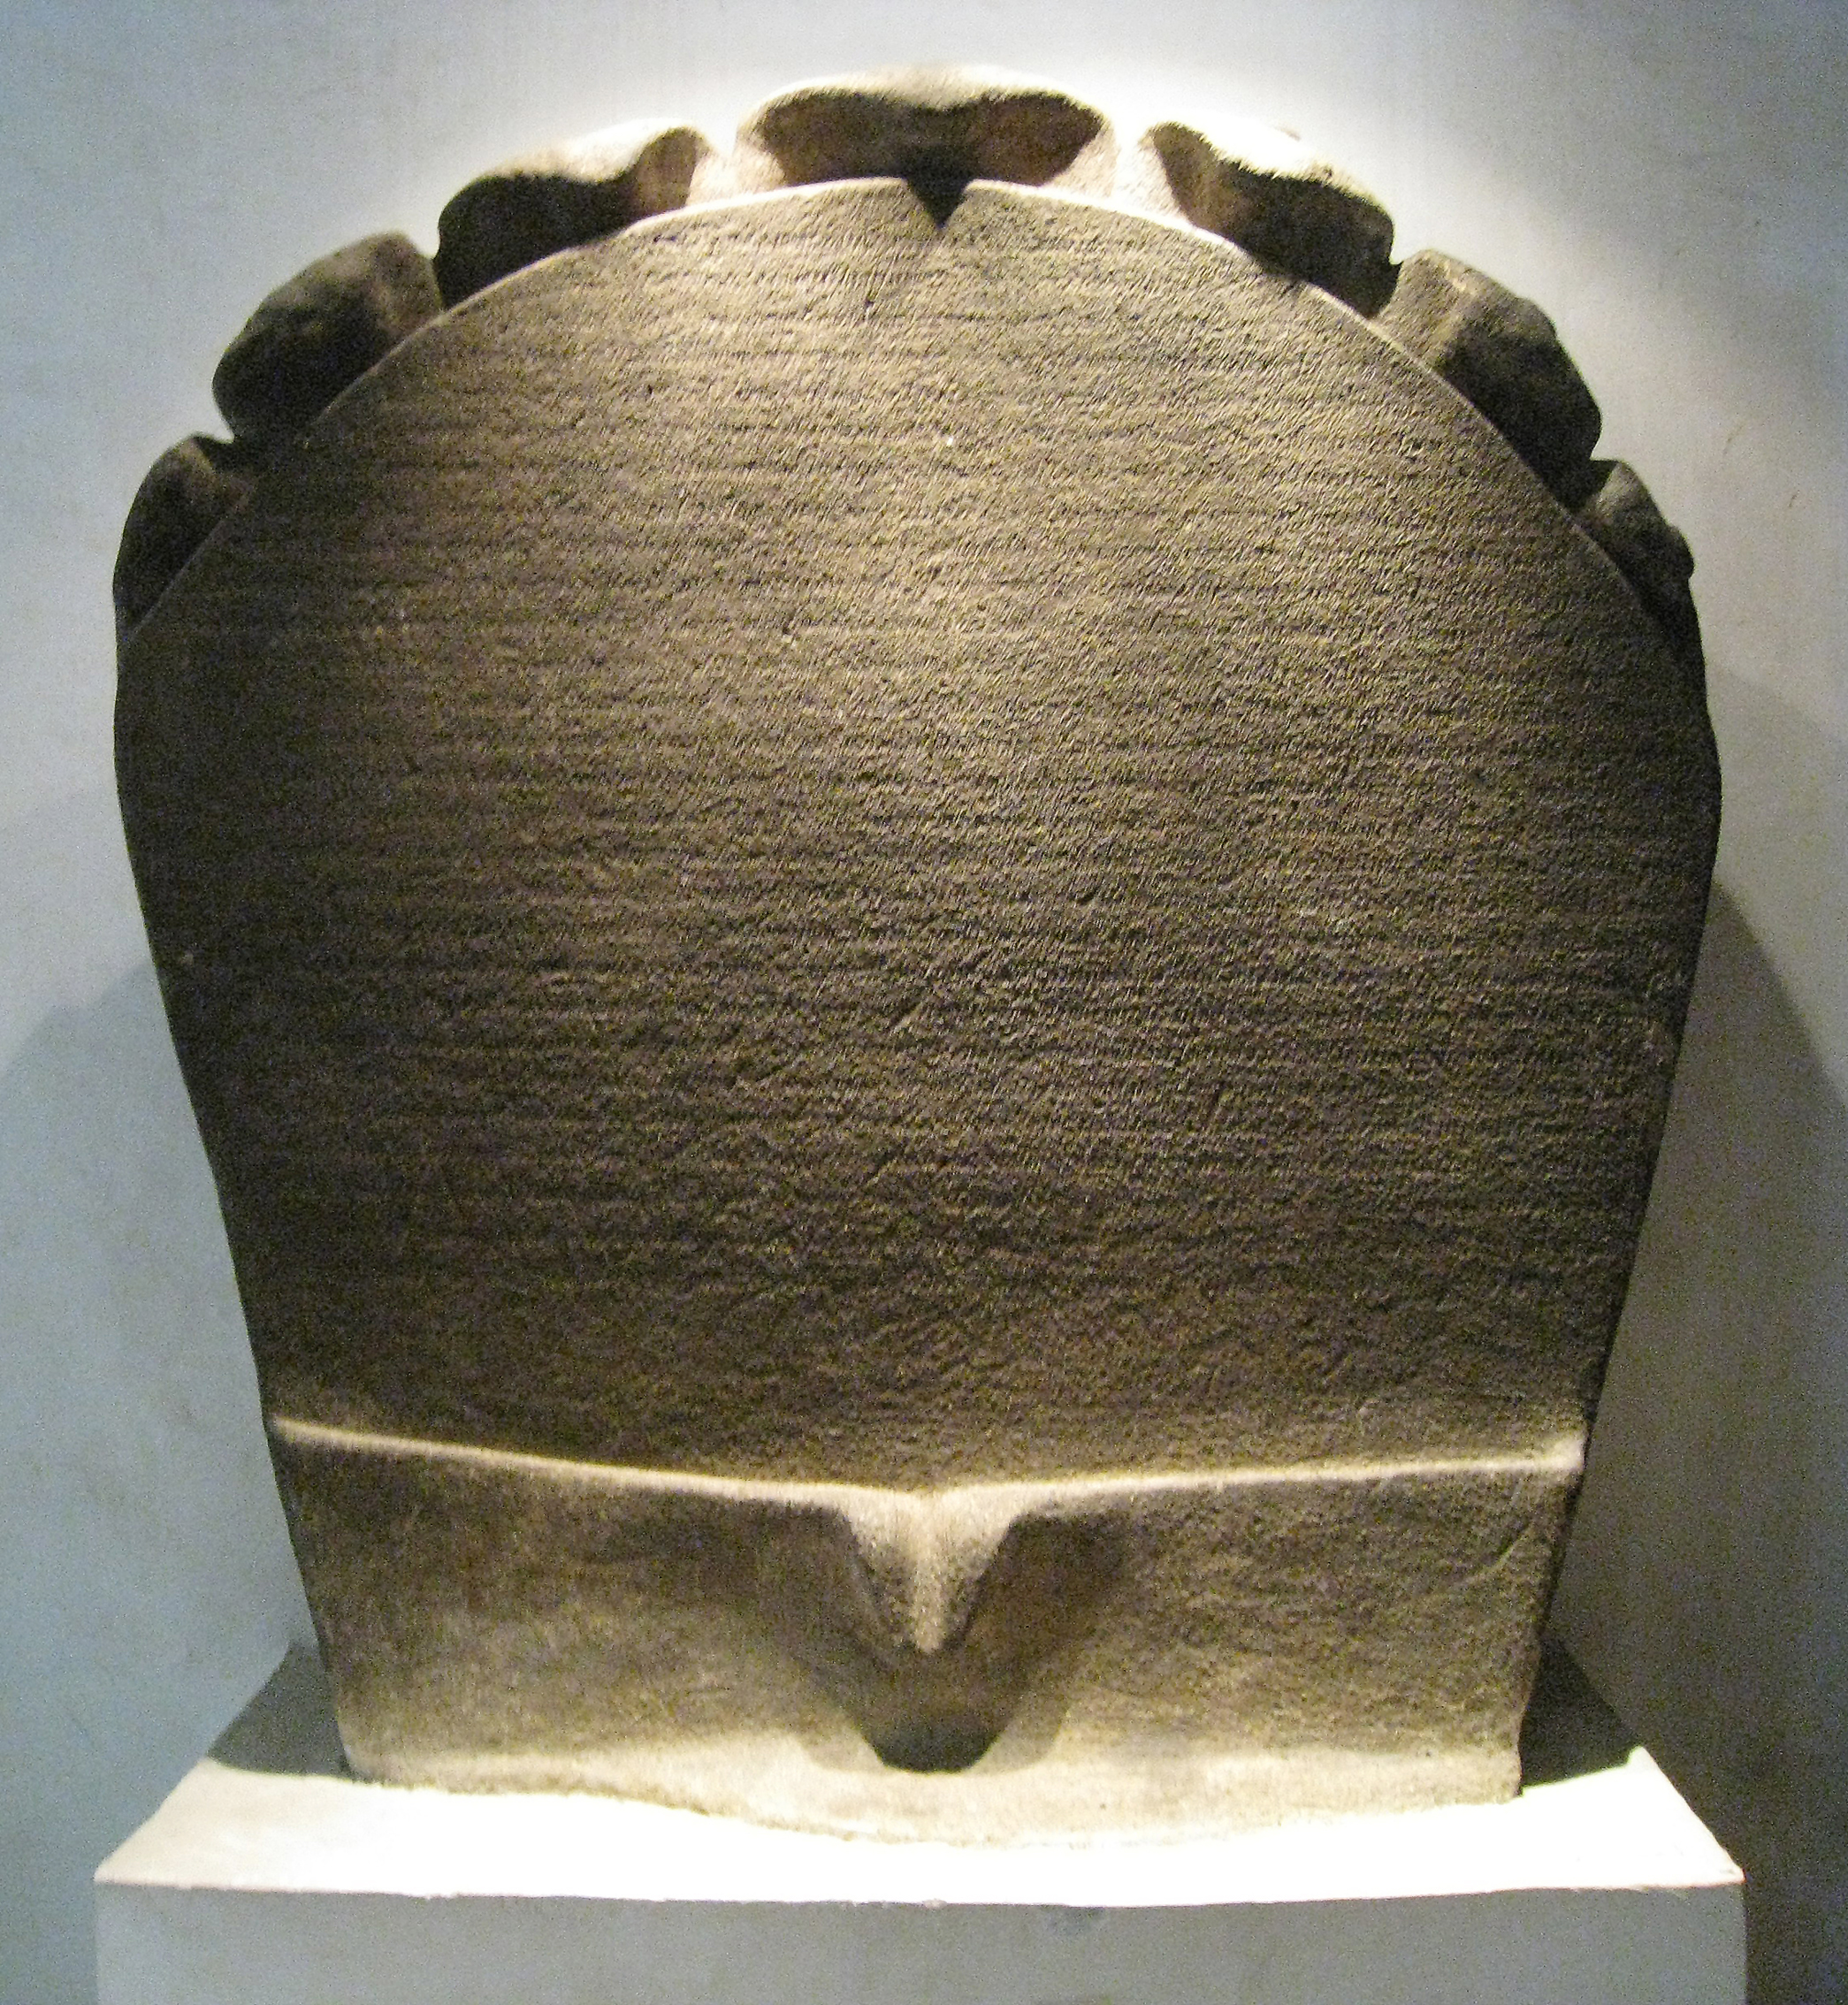 Telaga Batu Inscription Wikipedia